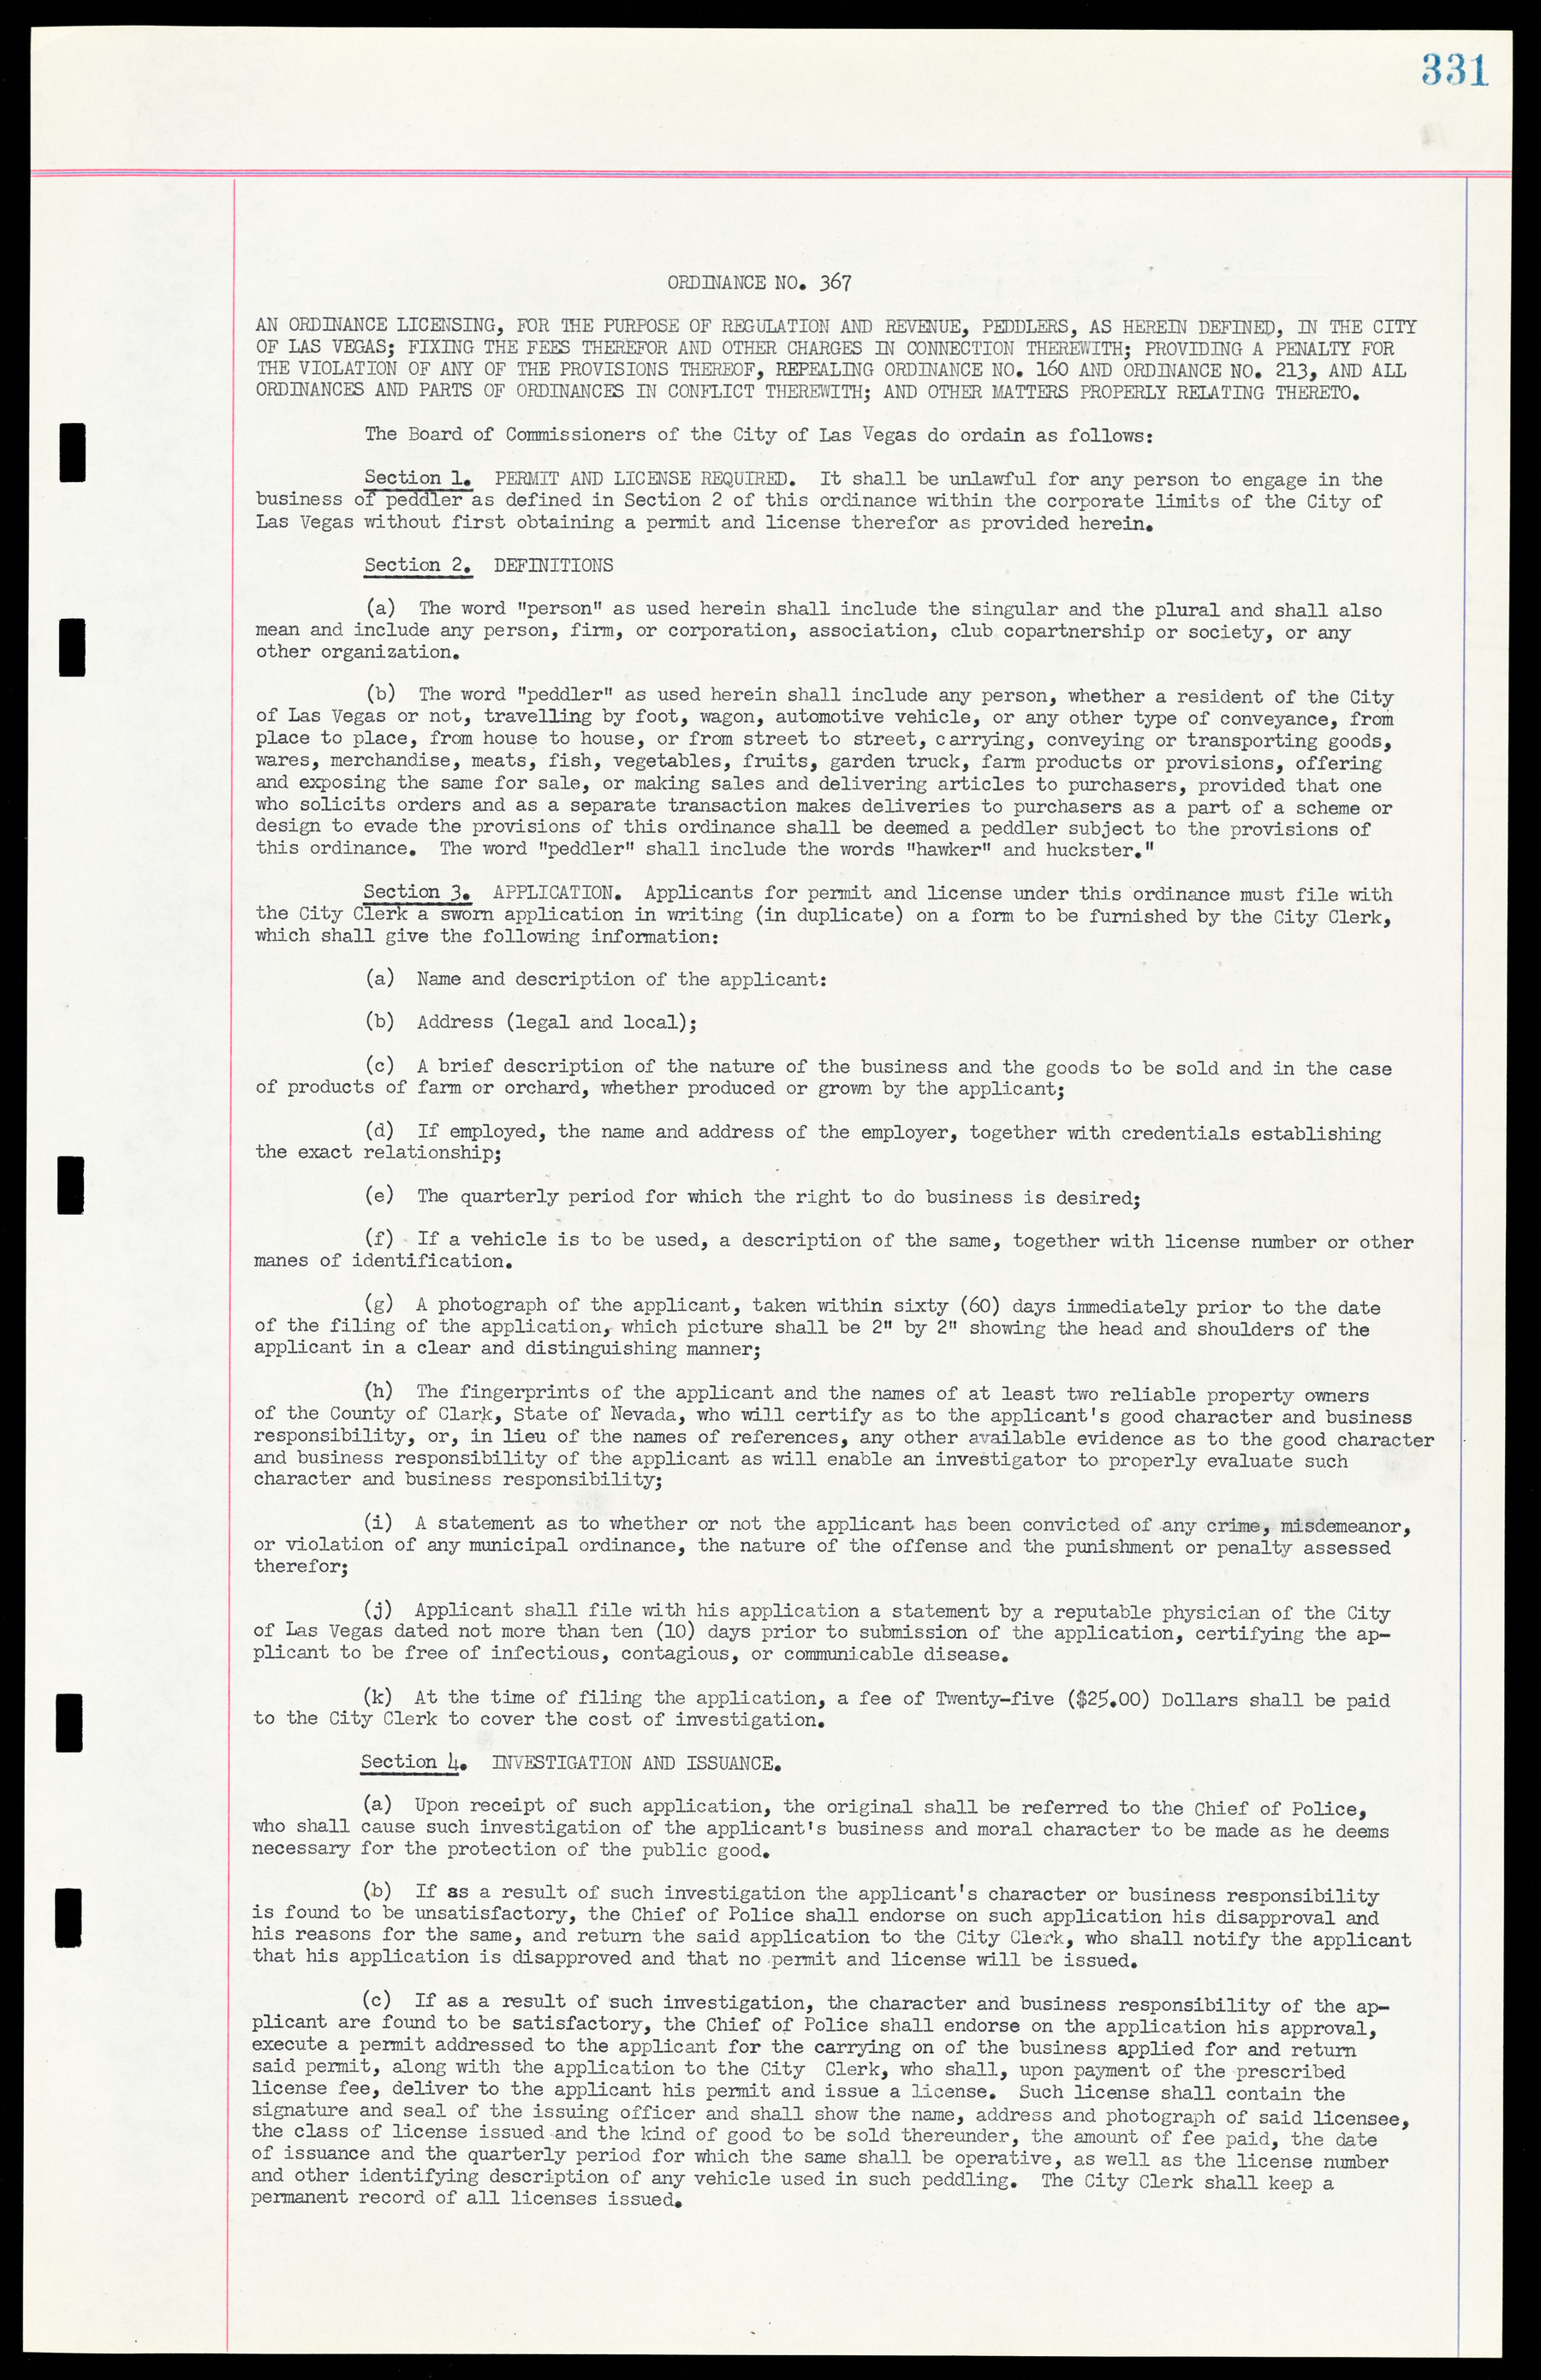 Las Vegas City Ordinances, March 31, 1933 to October 25, 1950, lvc000014-360